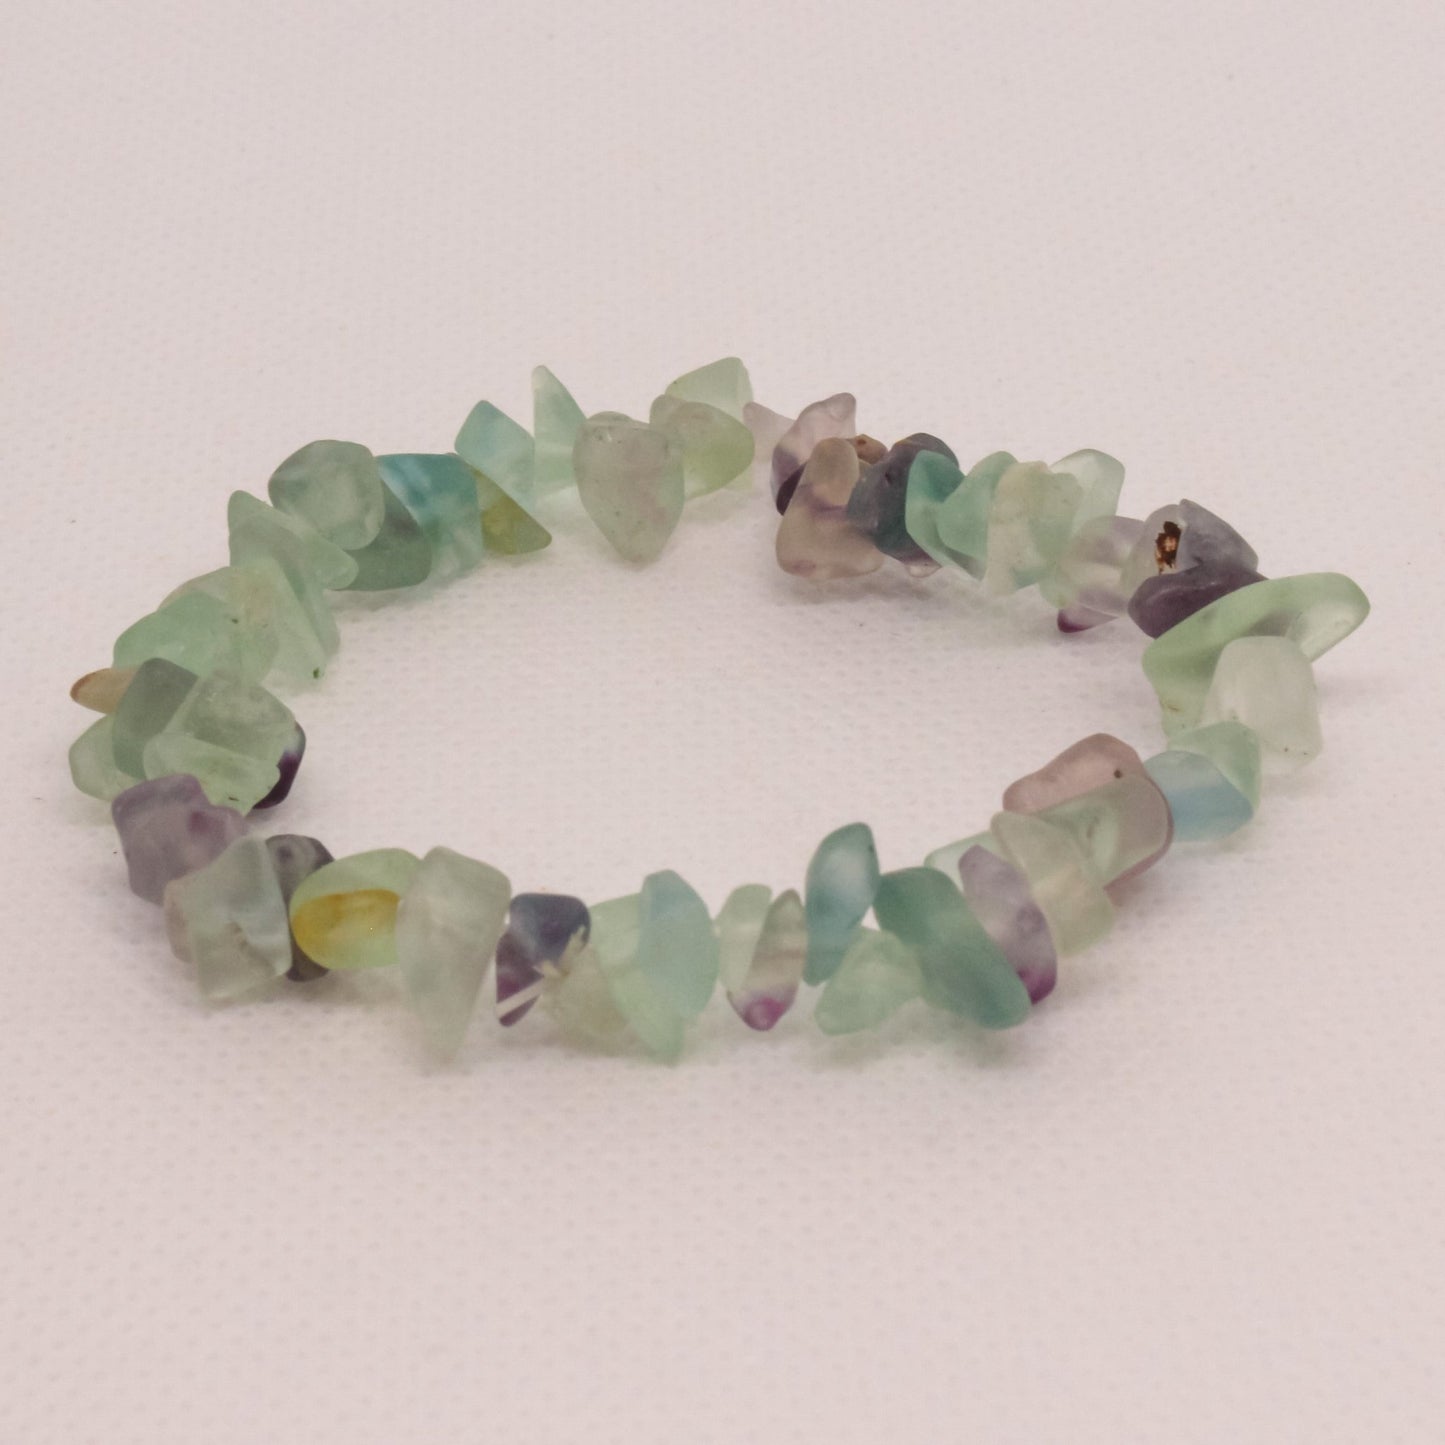 Rainbow Fluorite Bracelet - Conscious Crystals New Zealand Crystal and Spiritual Shop